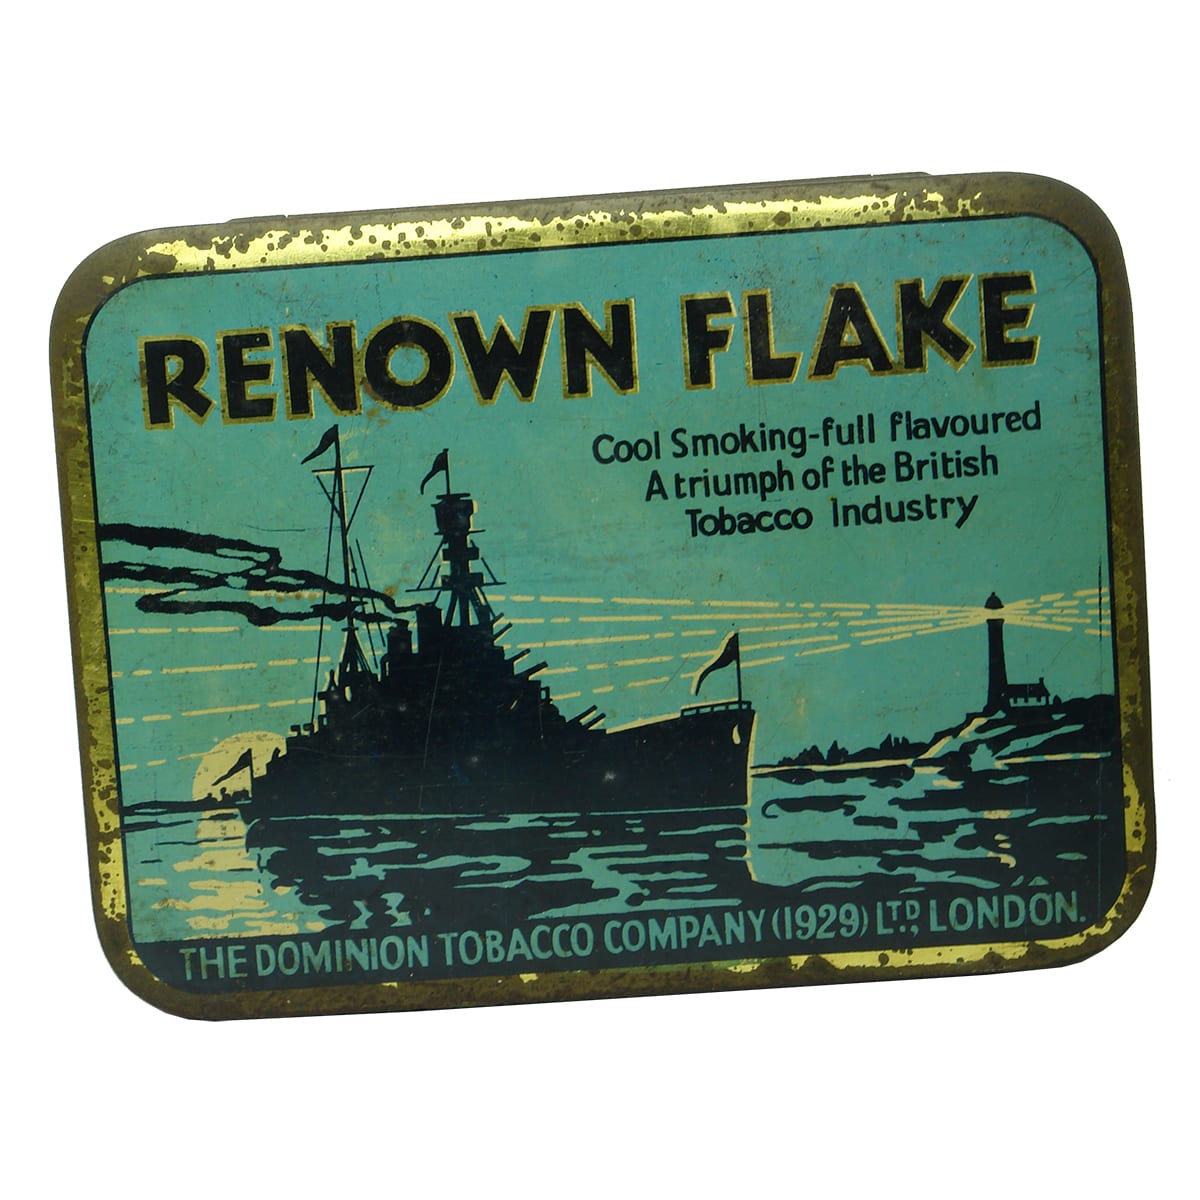 Tin. Renown Flake, The Dominion Tobacco Company (1929) Ltd, London. 1 Pound.